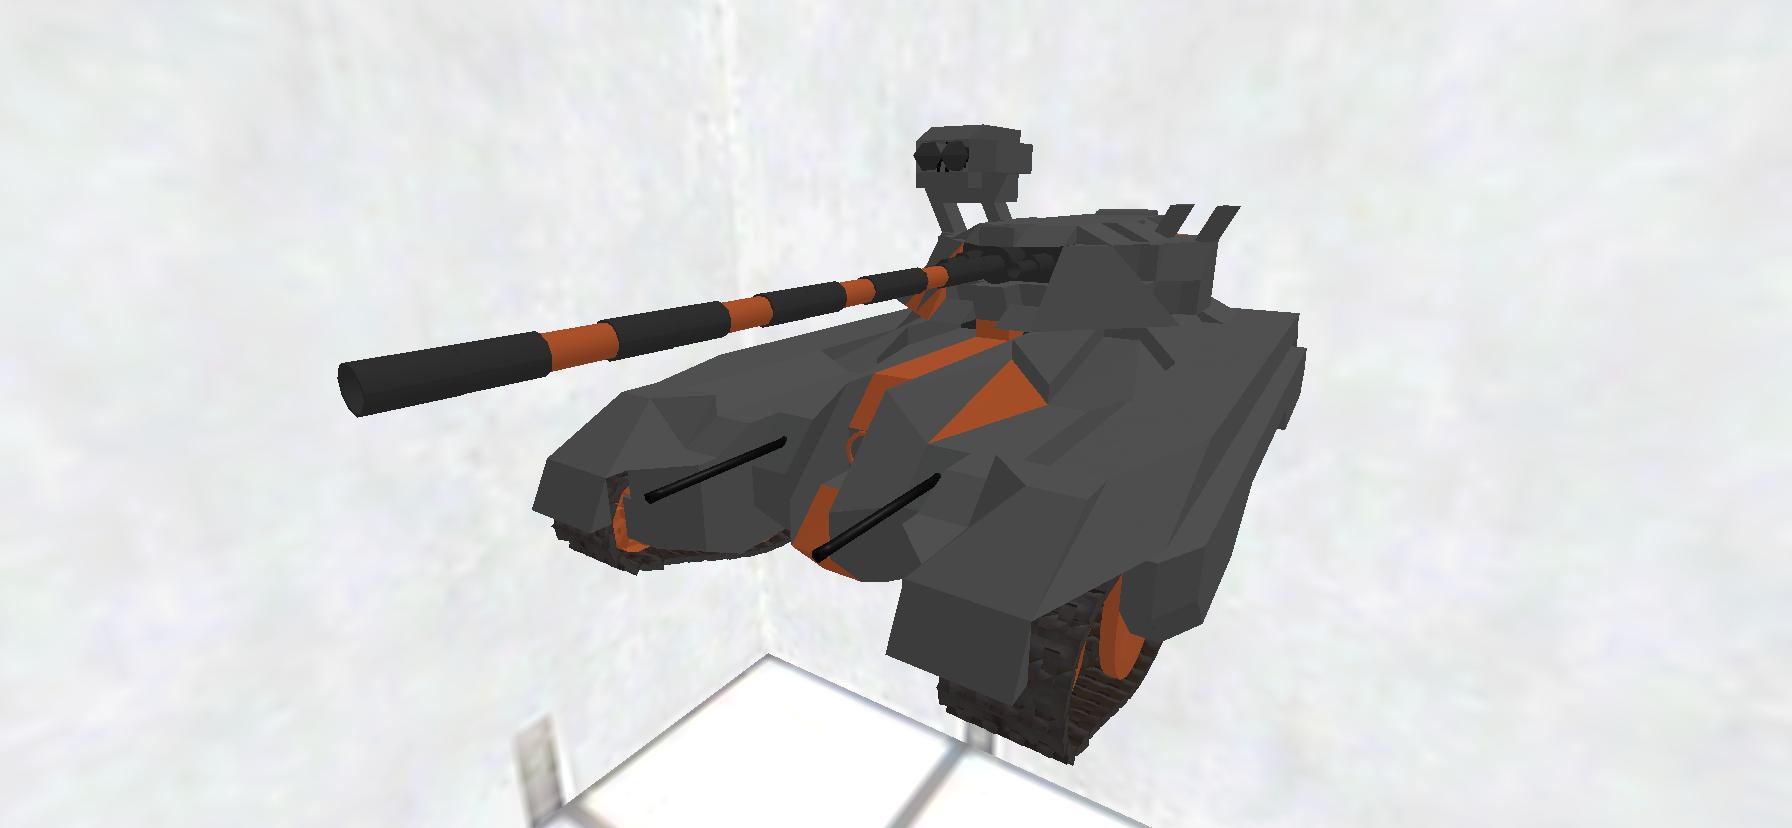 Imperial Guard MK-3 Ballistia